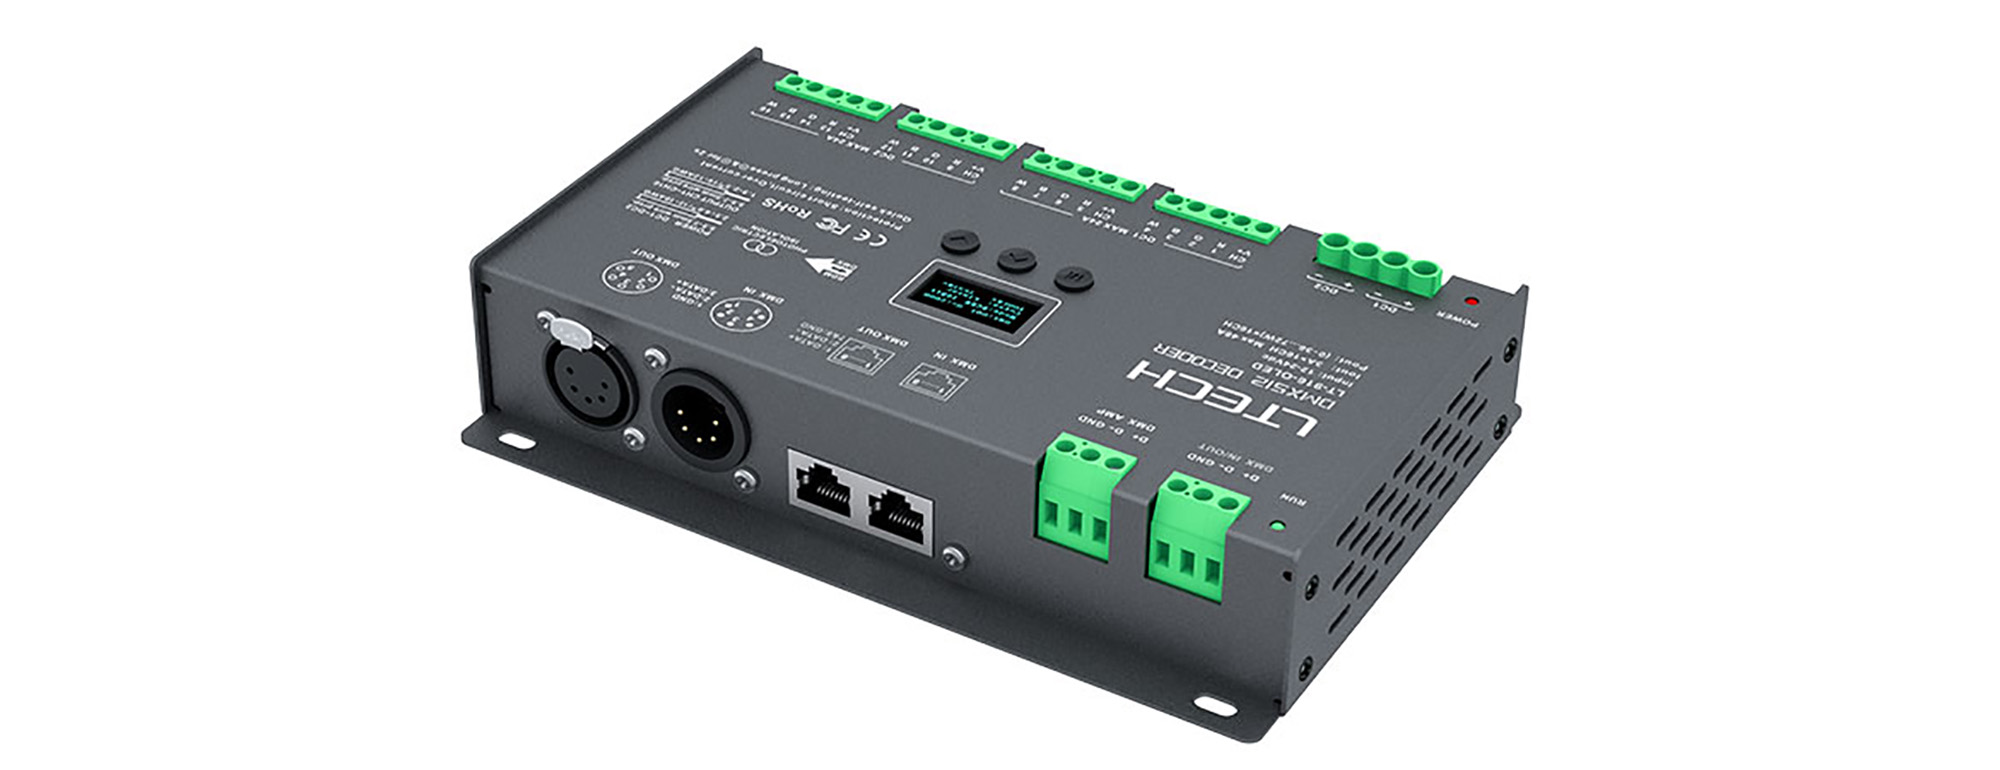 916-OLED  16Ch 3A CV DMX Decoder, 1152W Max.Power, XLR-5 Green Terminal & RJ45 Port, Self testing, DMX512/RDM I/P signal, IP20.